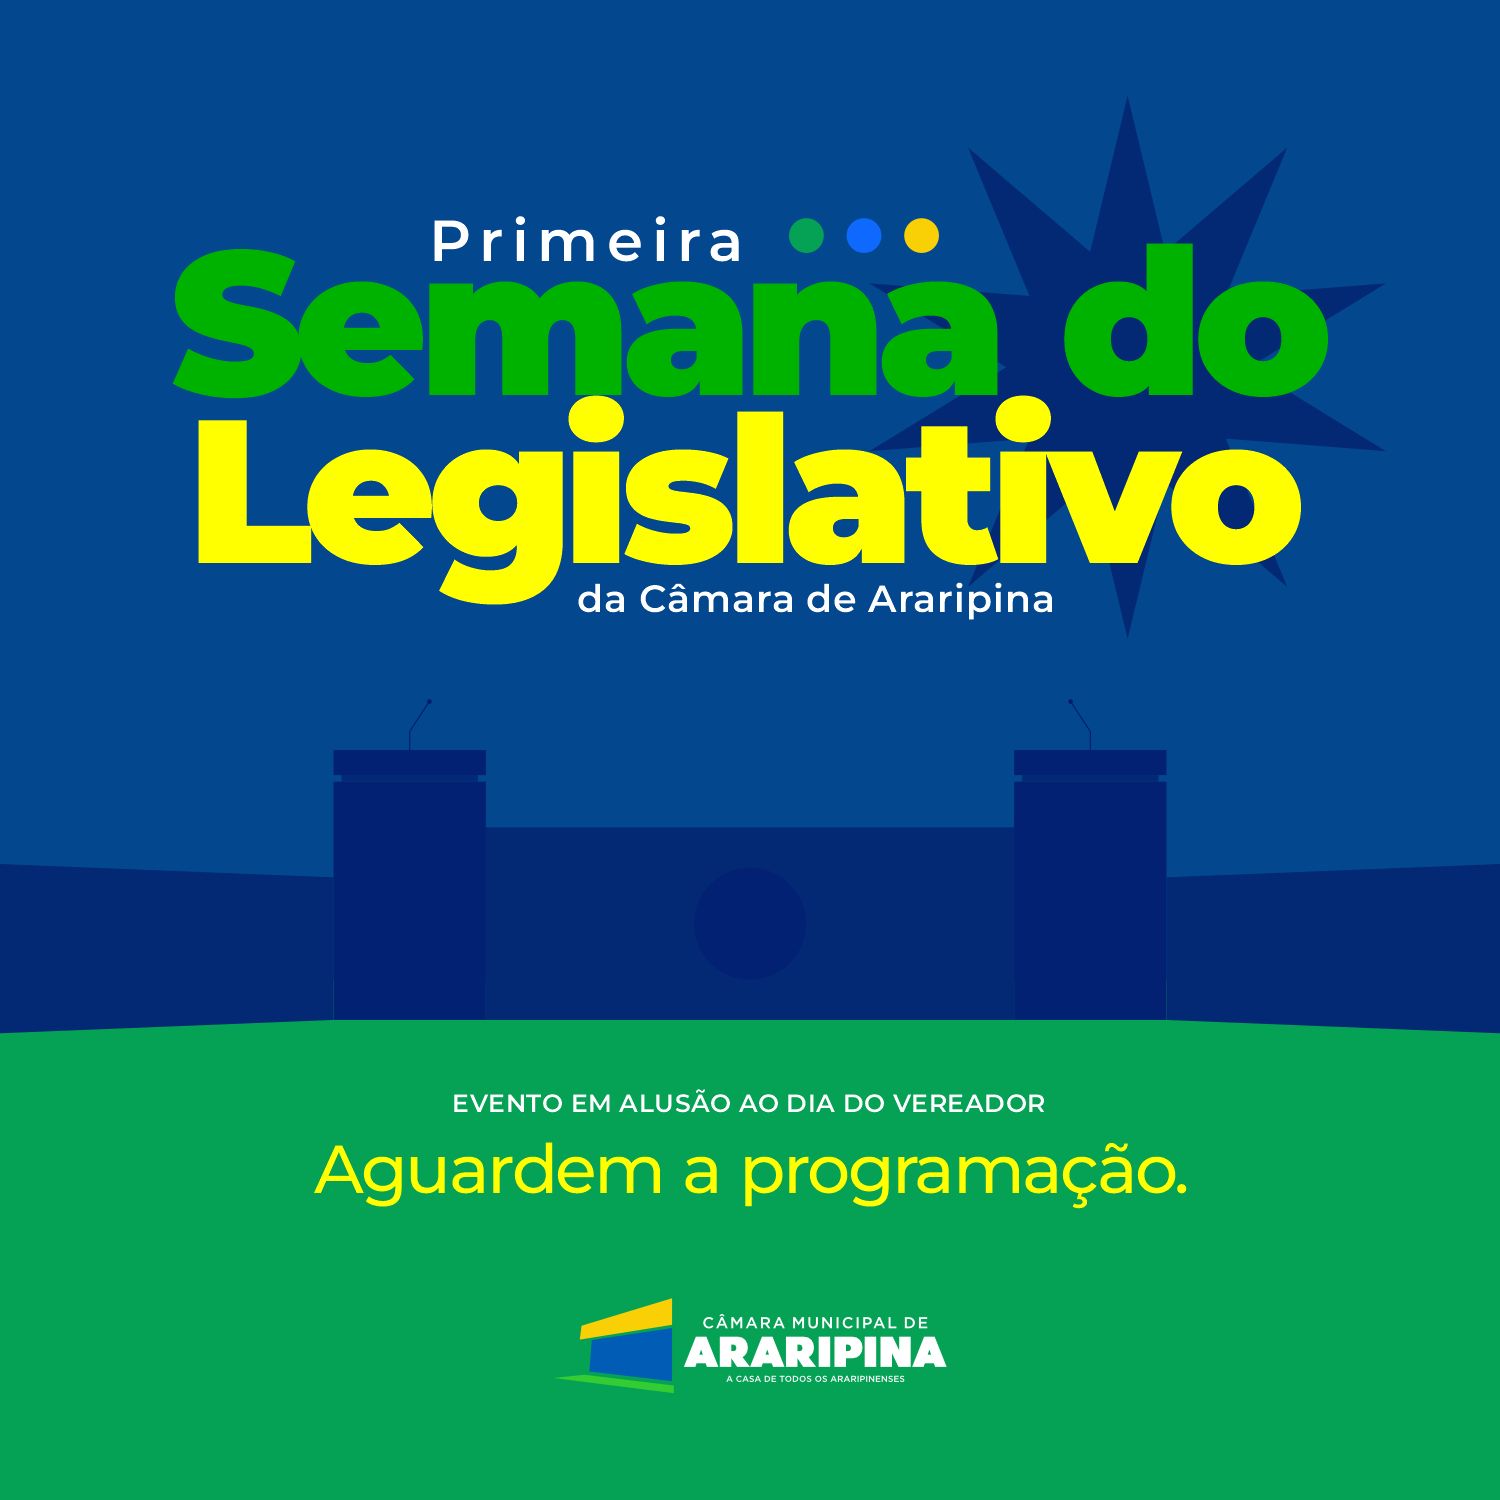 Câmara de Araripina vai promover semana do legislativo